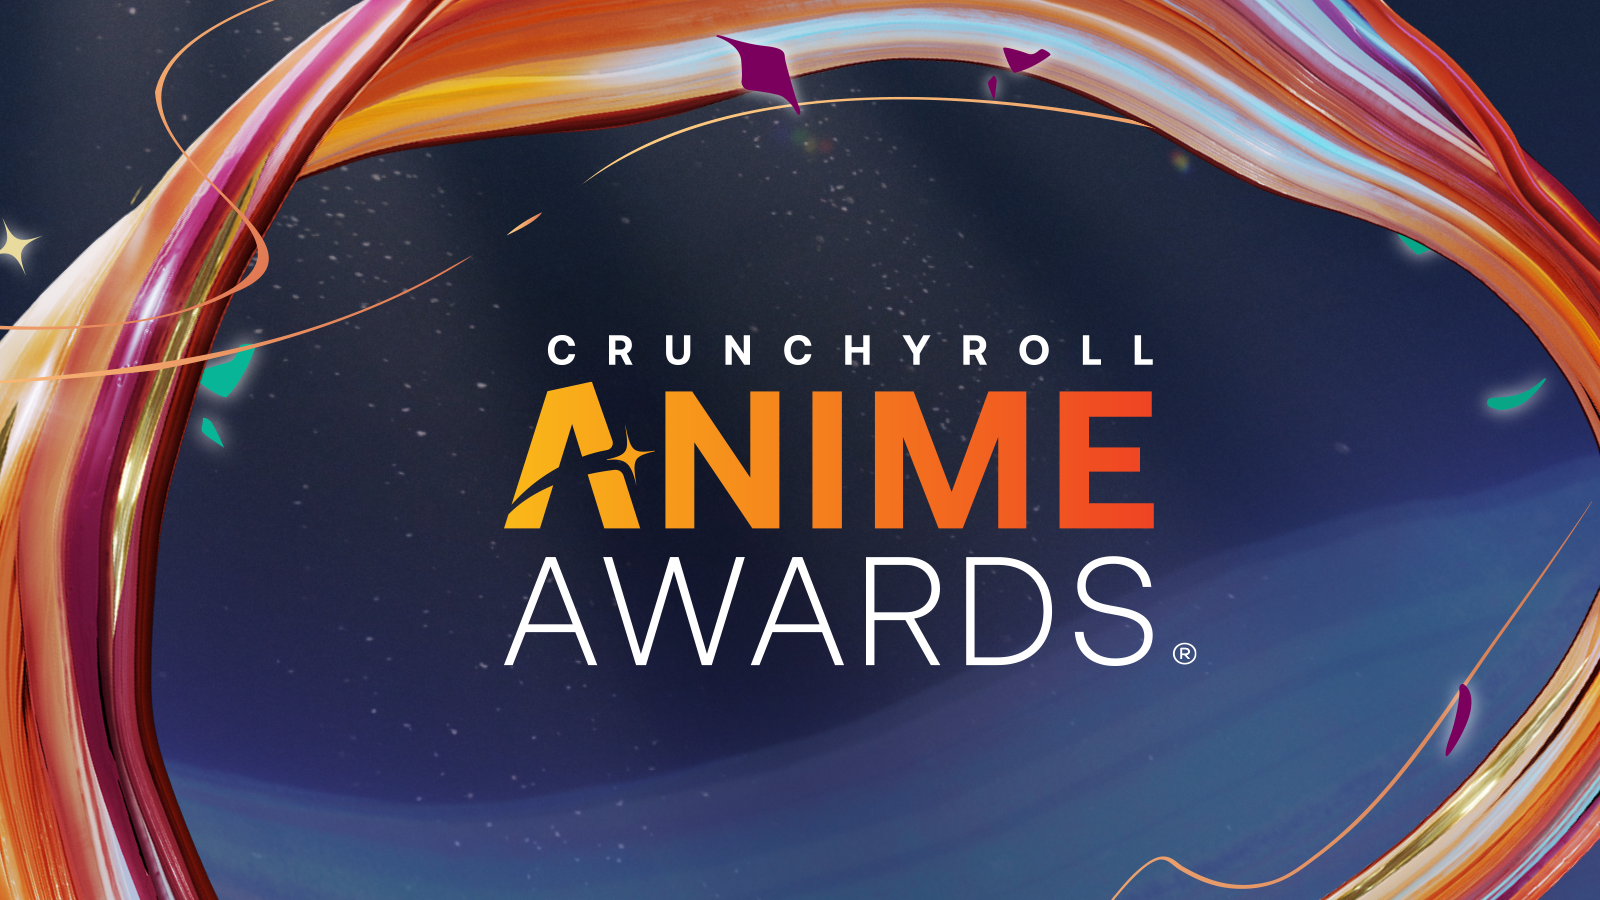 The Anime Awards